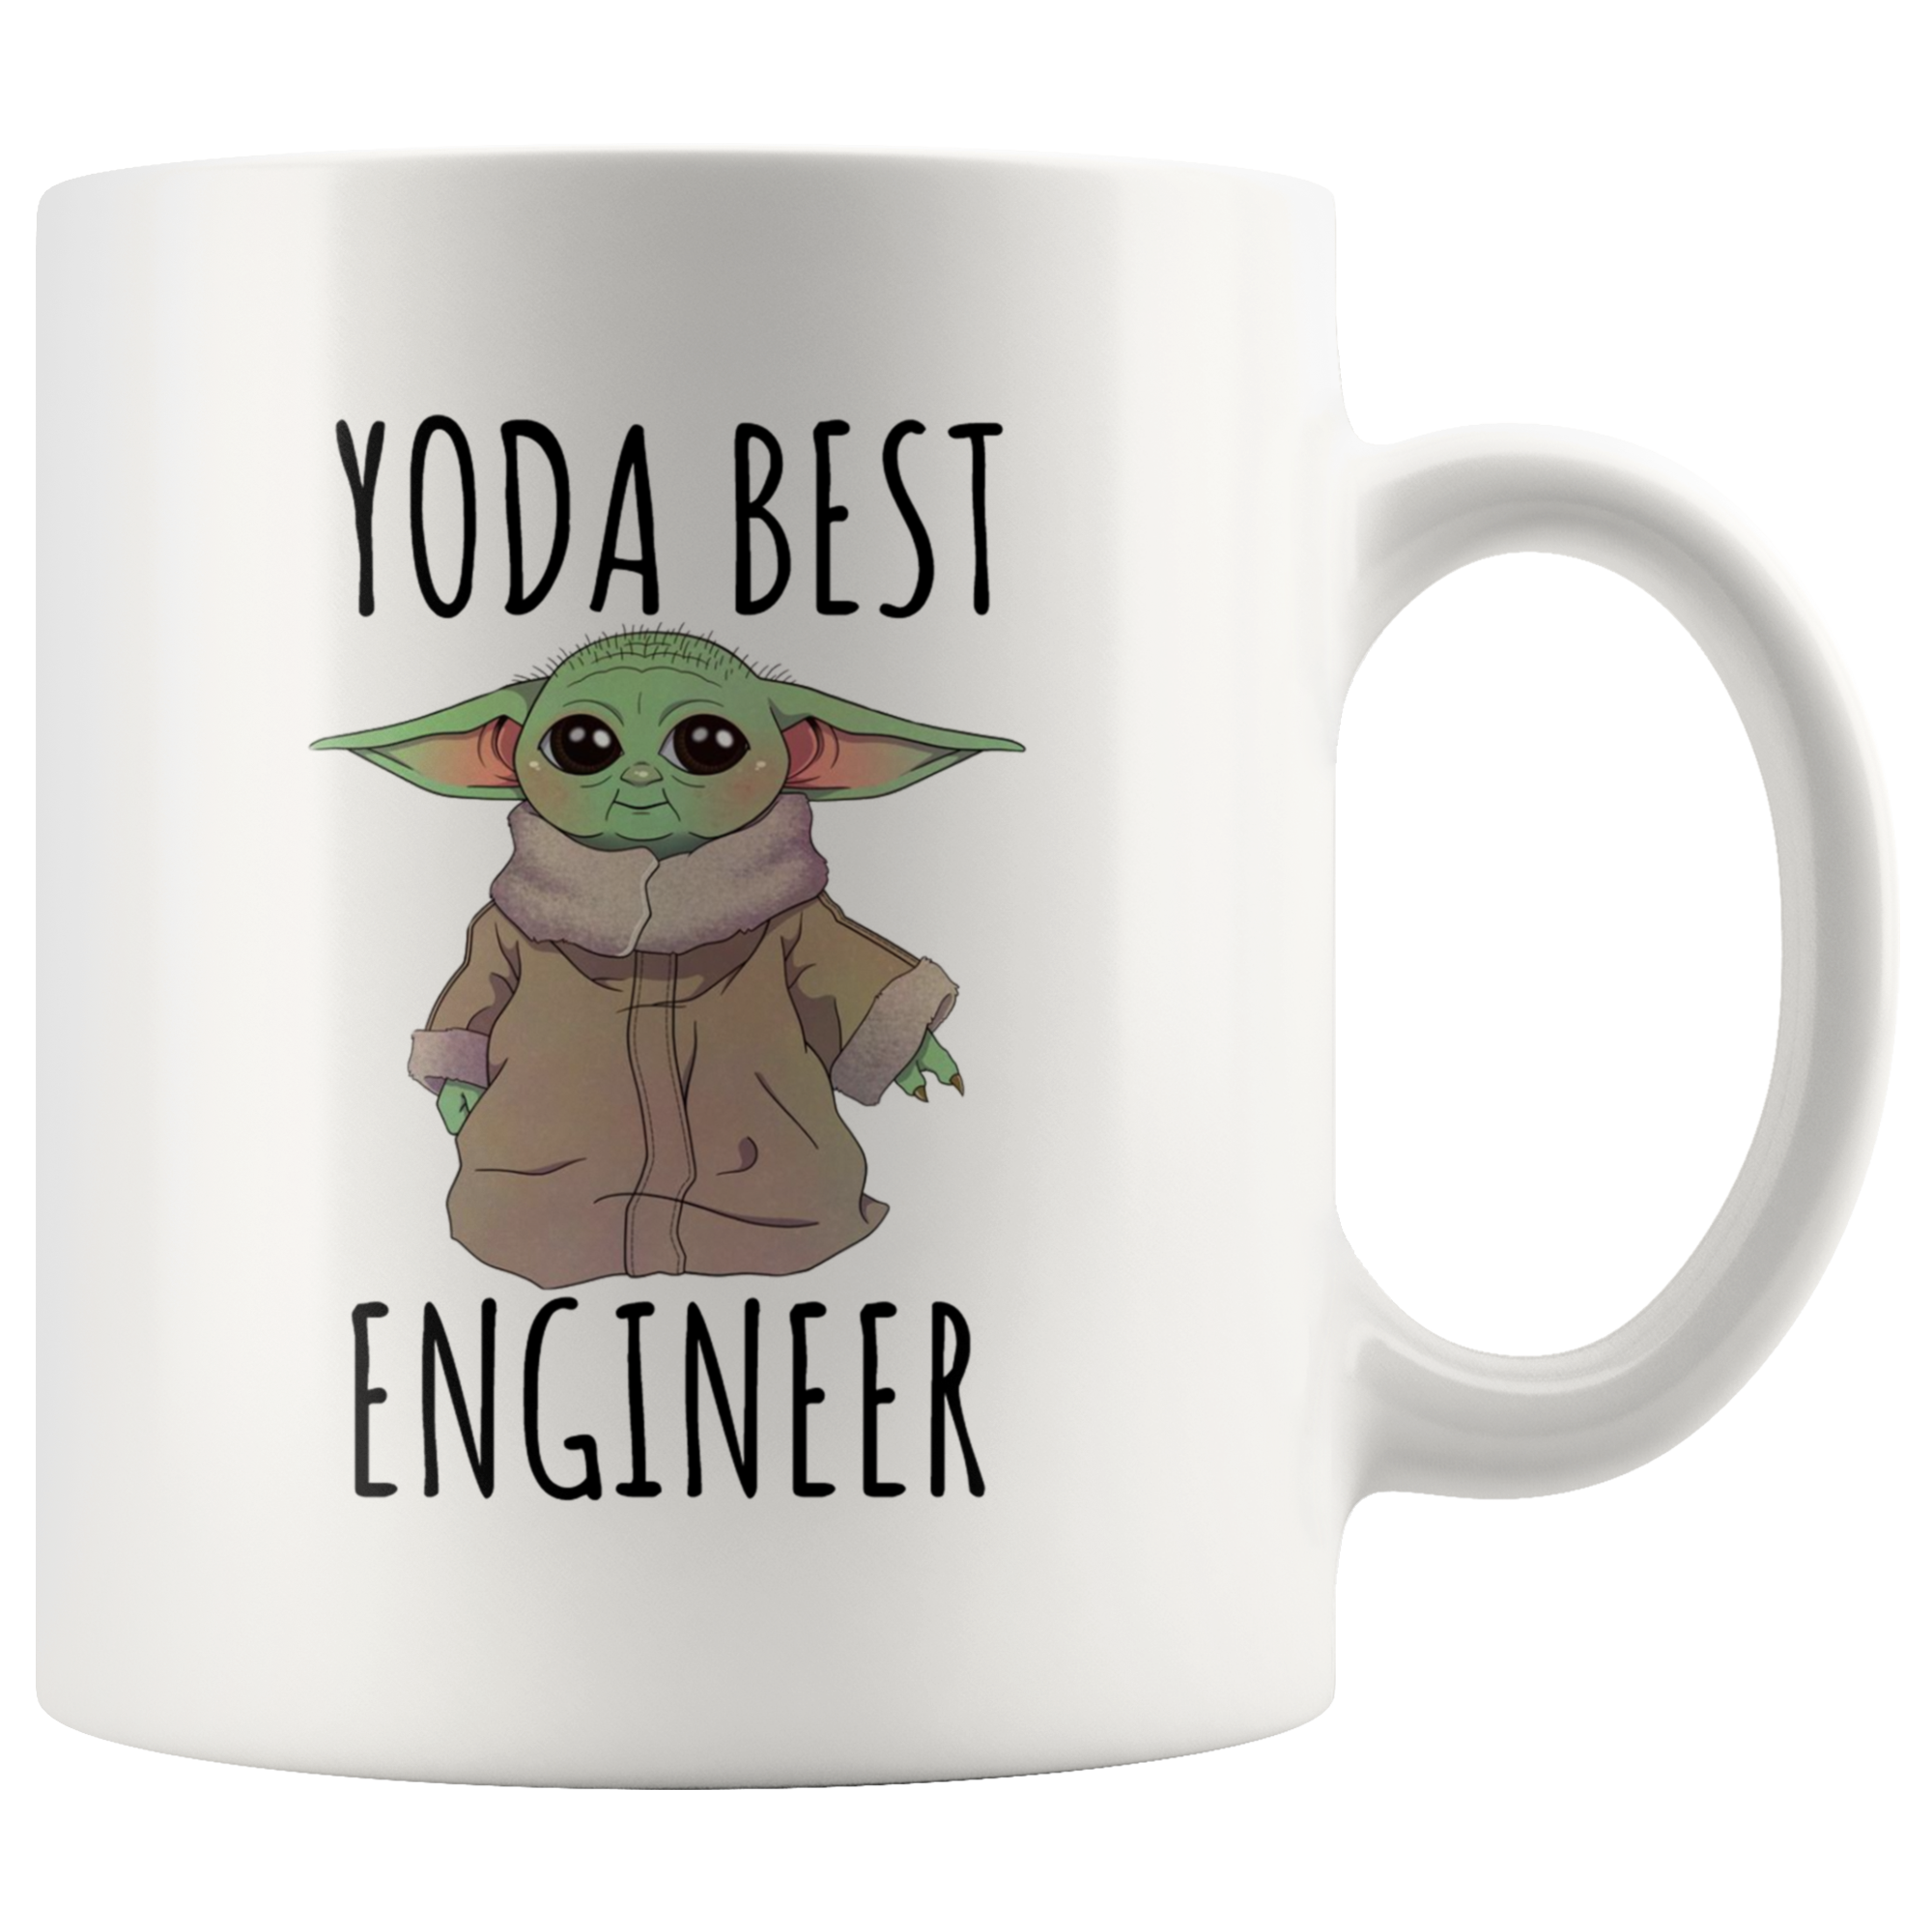 Yoda Best Engineer Mug